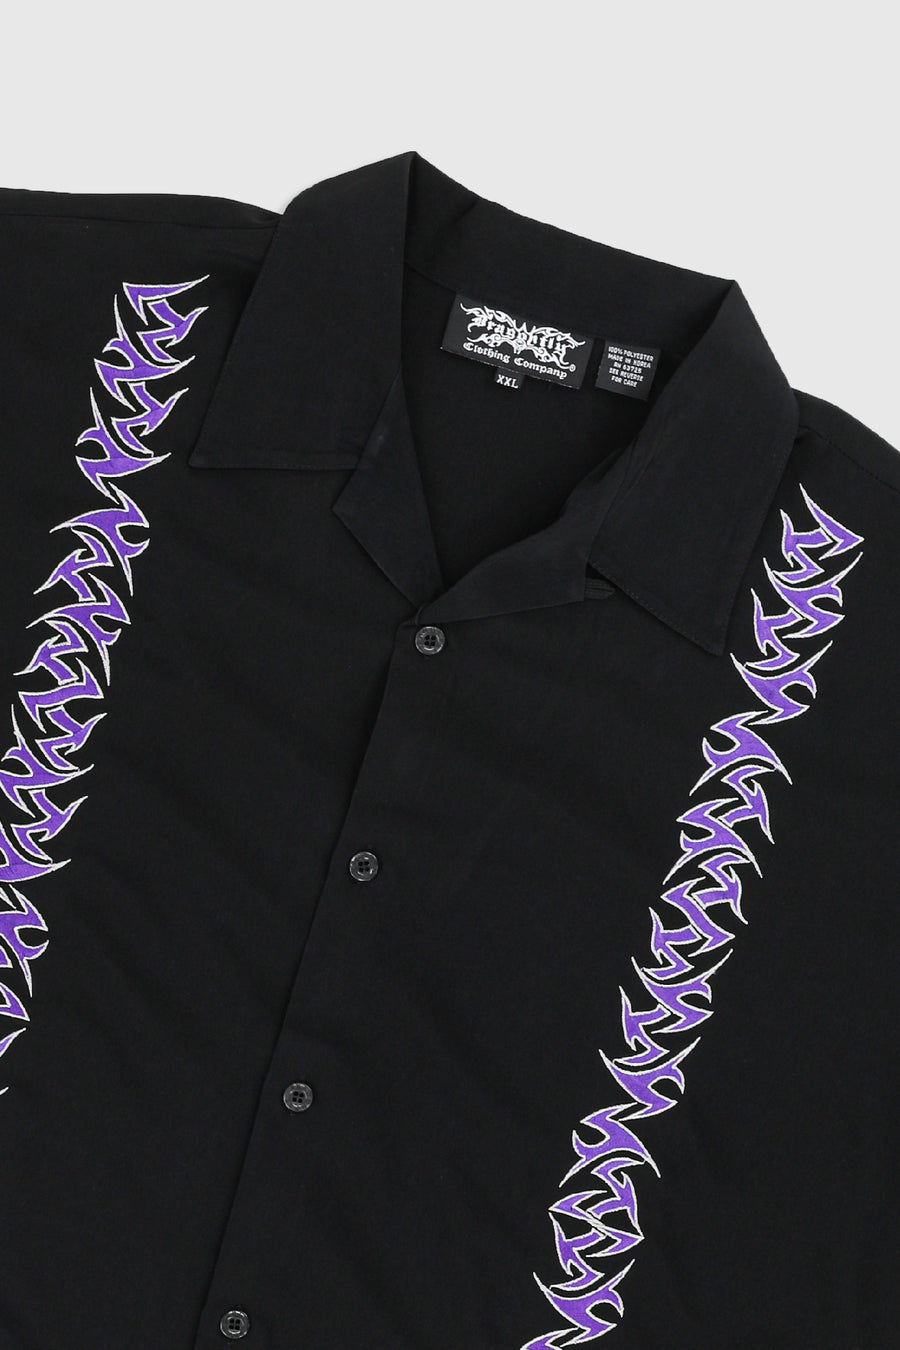 Deadstock Dragonfly Purple Tribal Camp Shirt - XXL